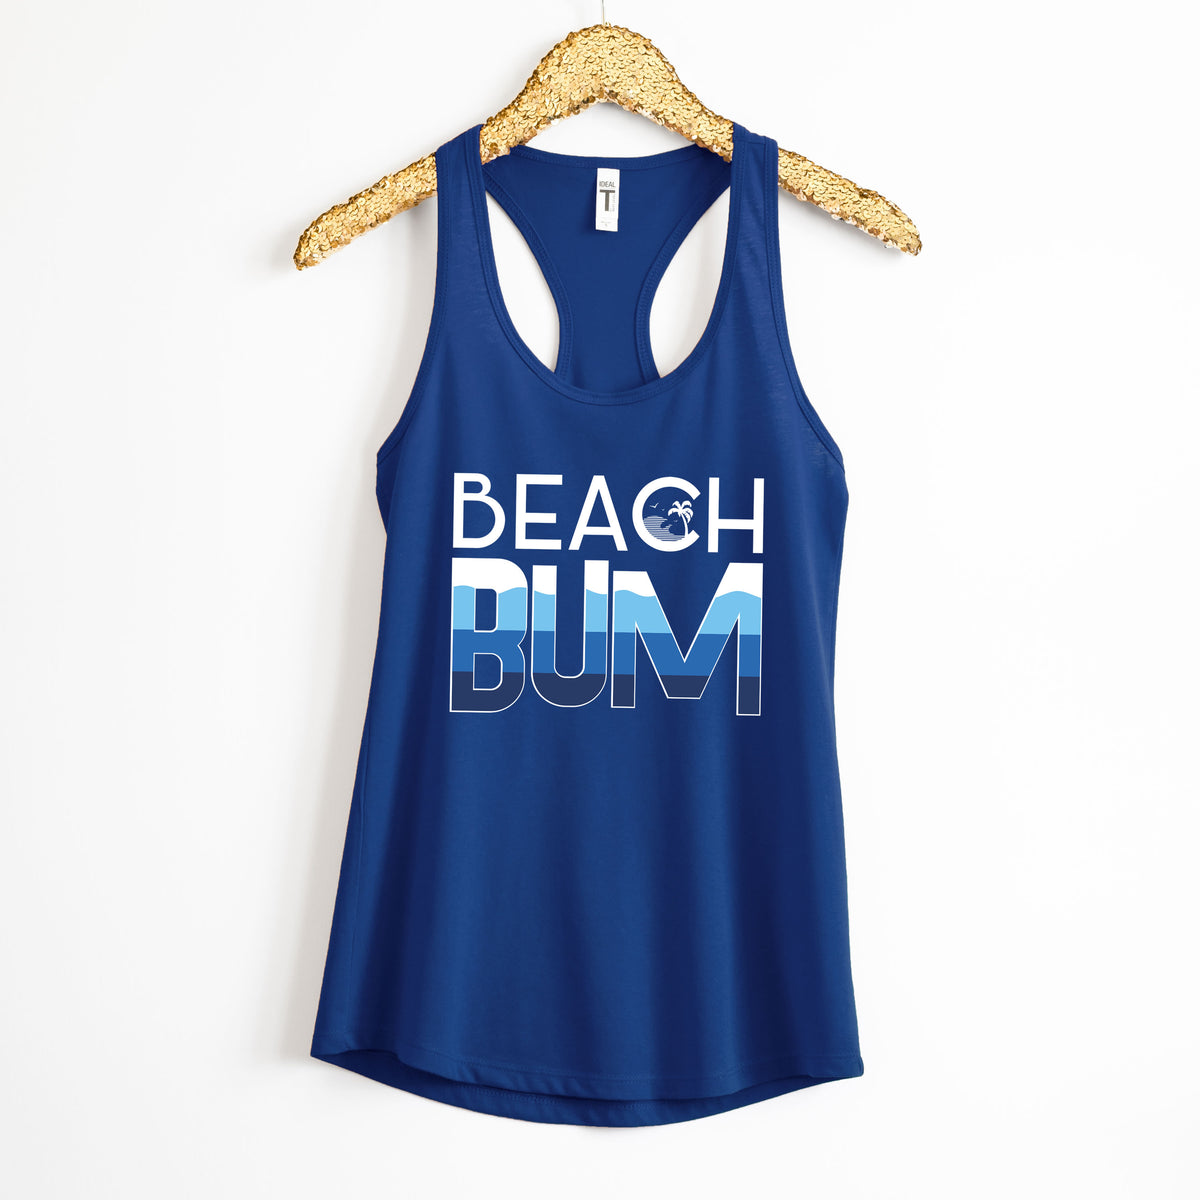 Beach Bum Shirt | Beach Life Shirt | Royal Blue Racerback Tank Top